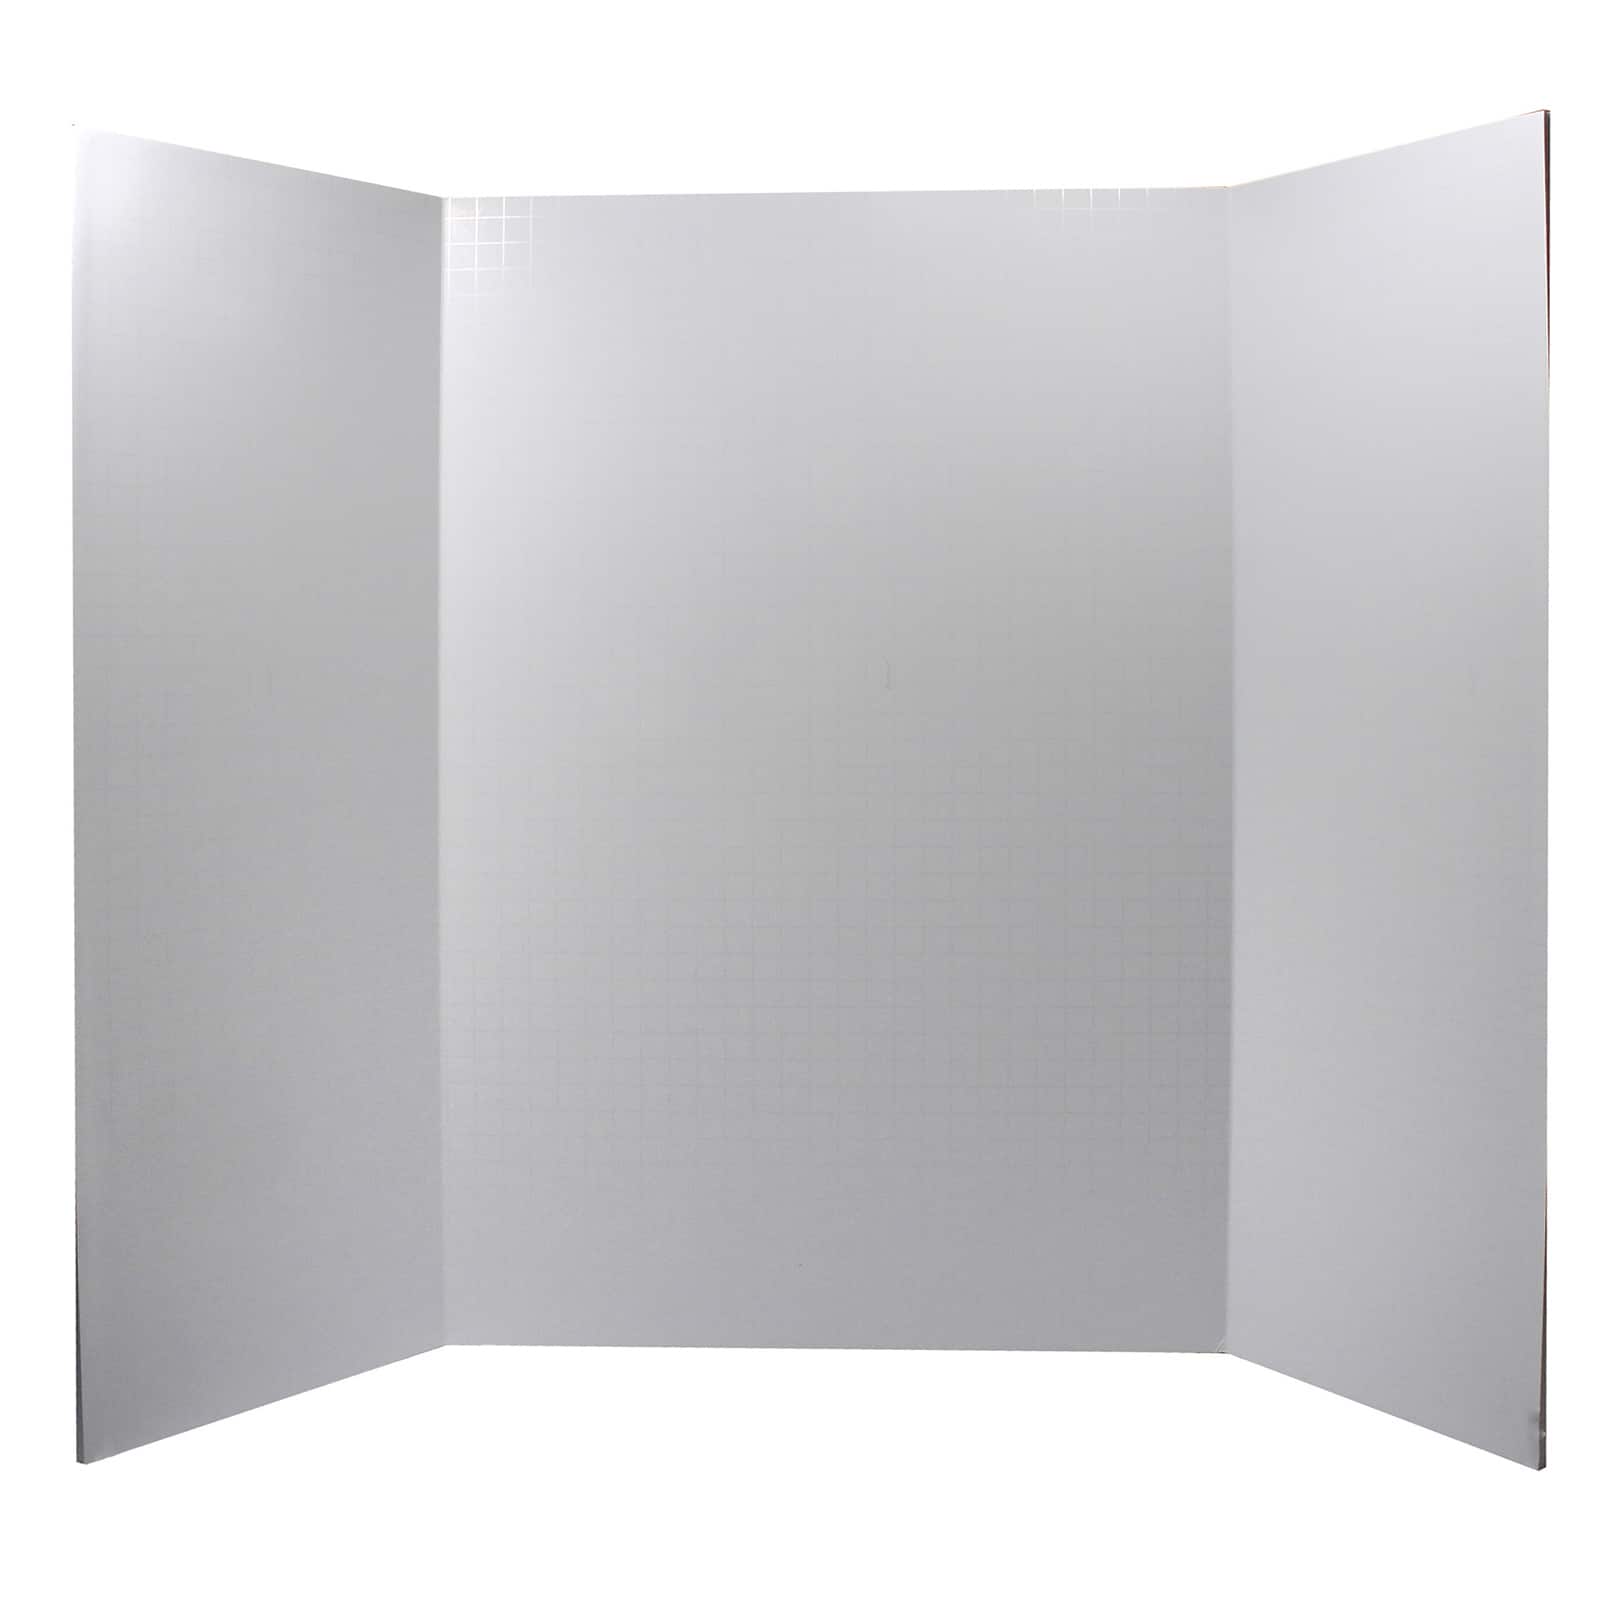 Elmer's 36 x 48 Tri-Fold Foam Presentation Board White - D3 Surplus Outlet